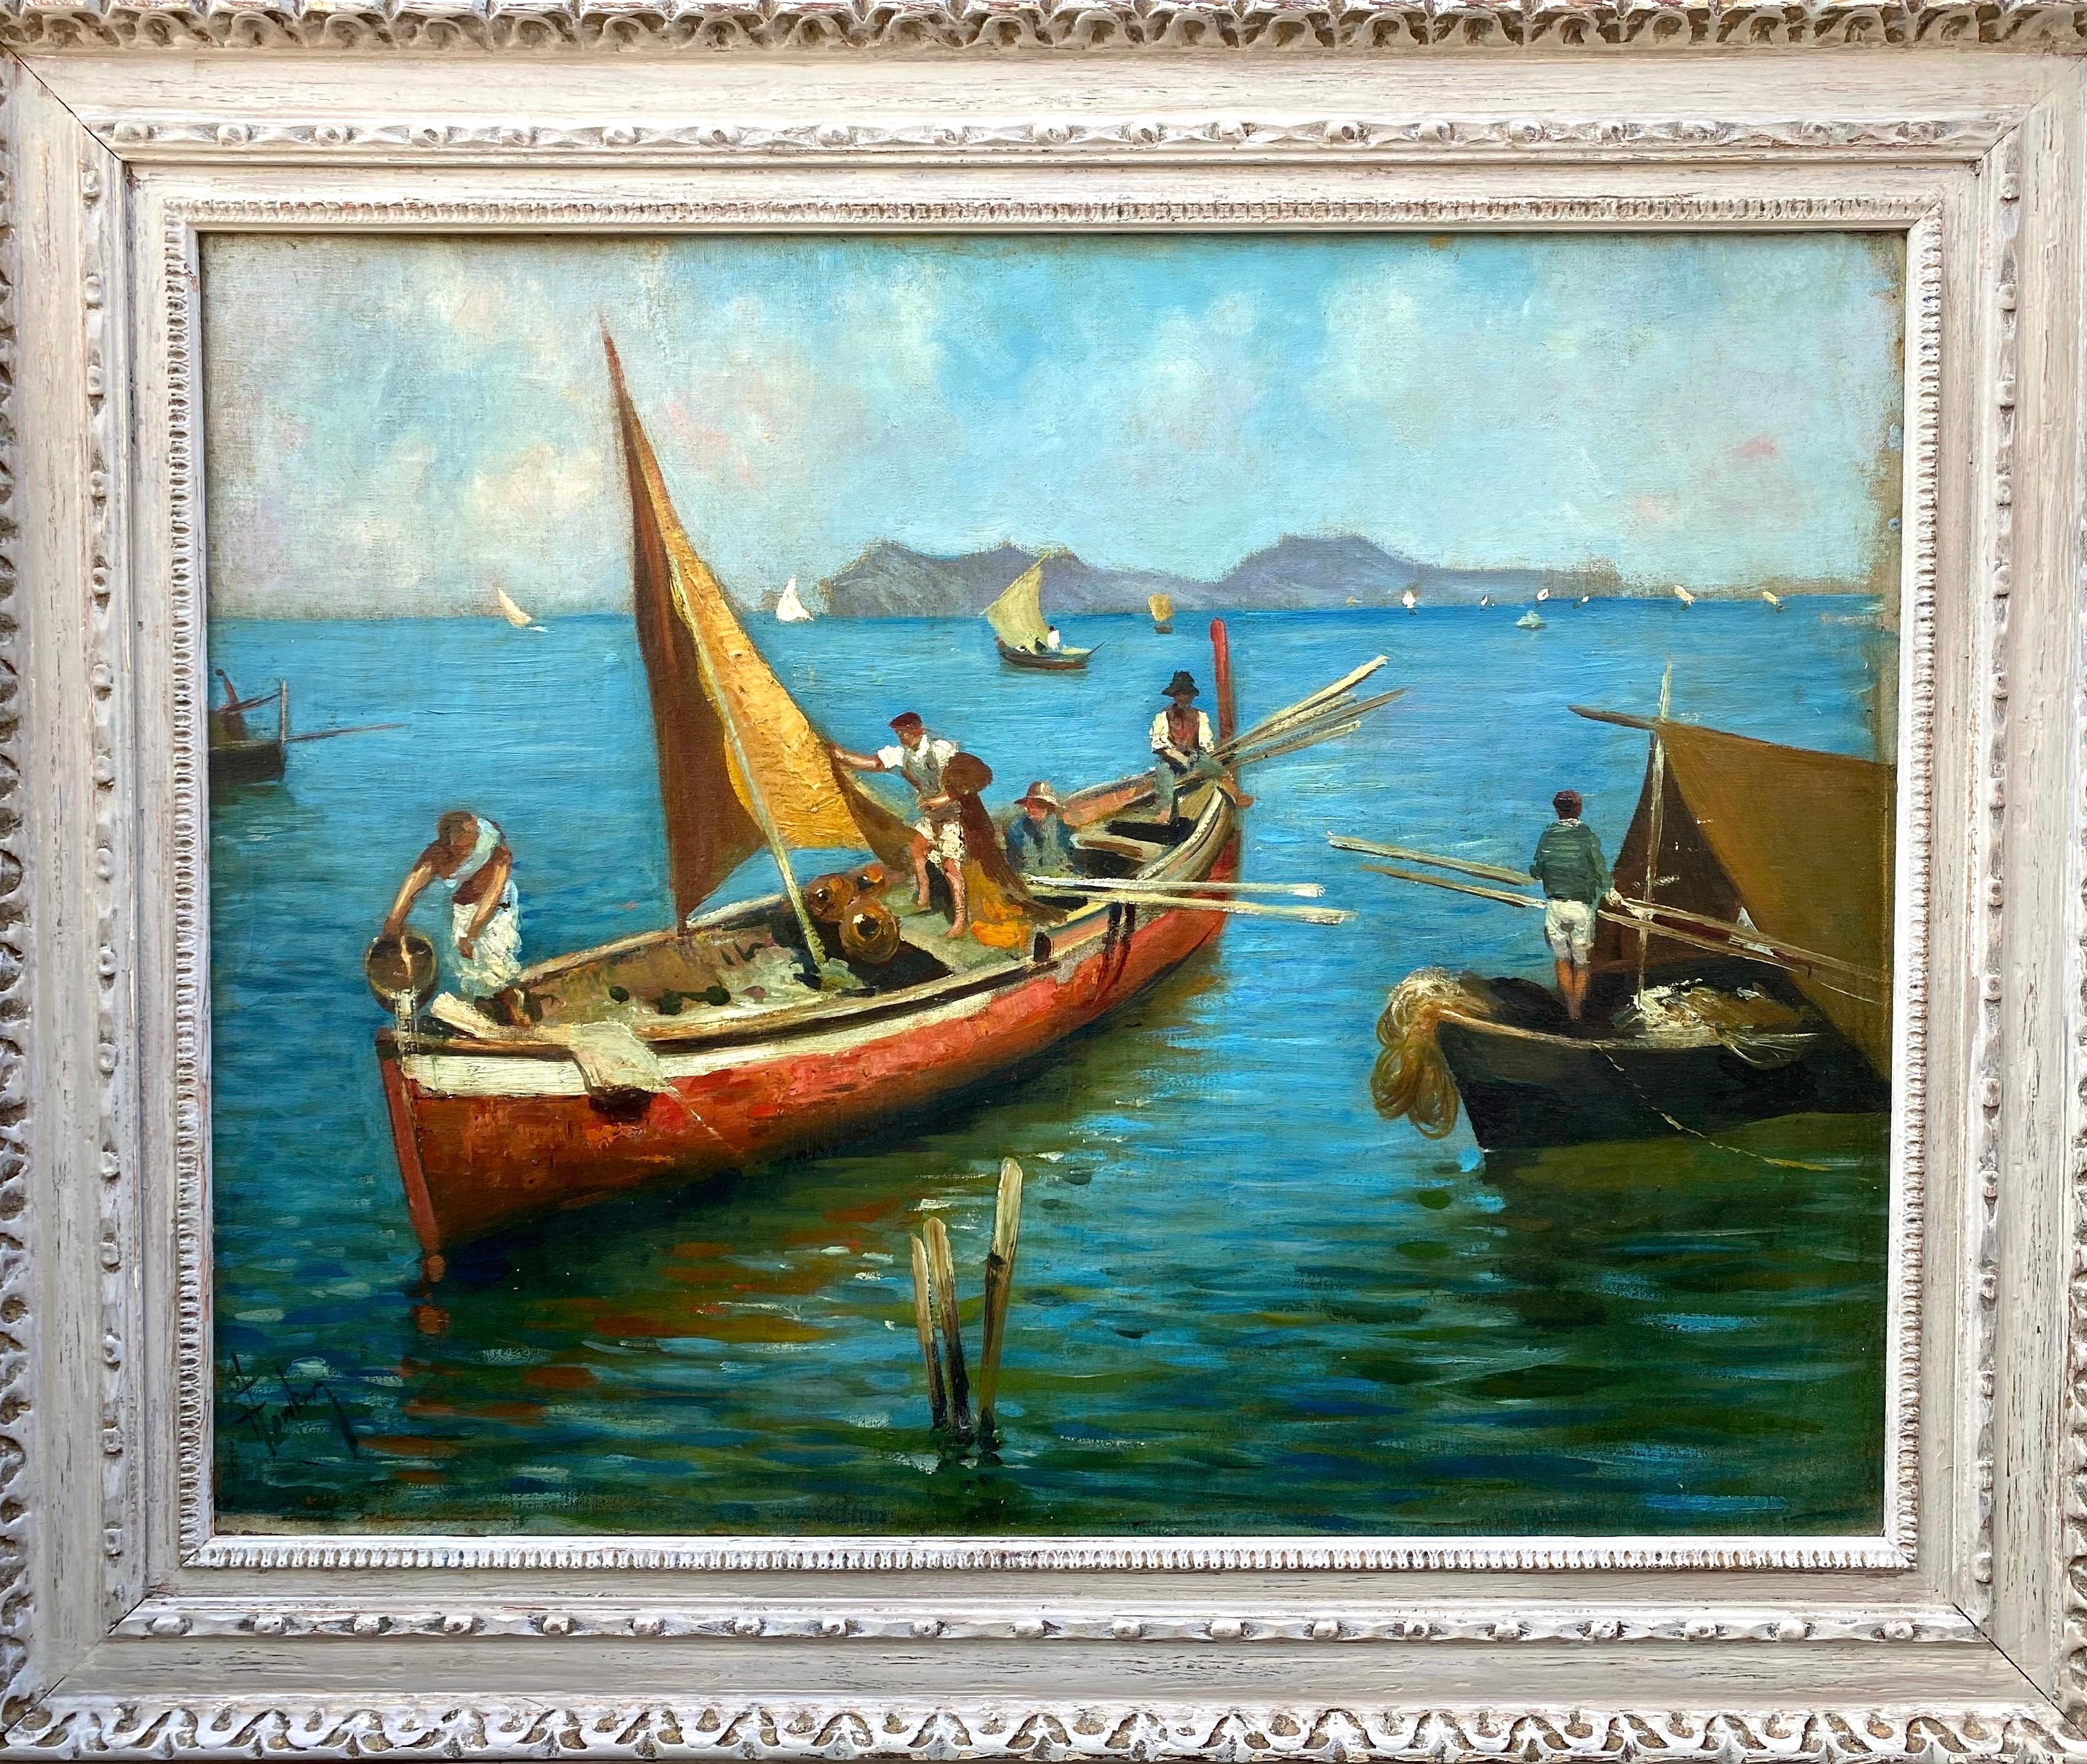 Leo Fontan Figurative Painting - Azure blue sea: boats and fishermen on the Mediterranean sunny coastal seascape